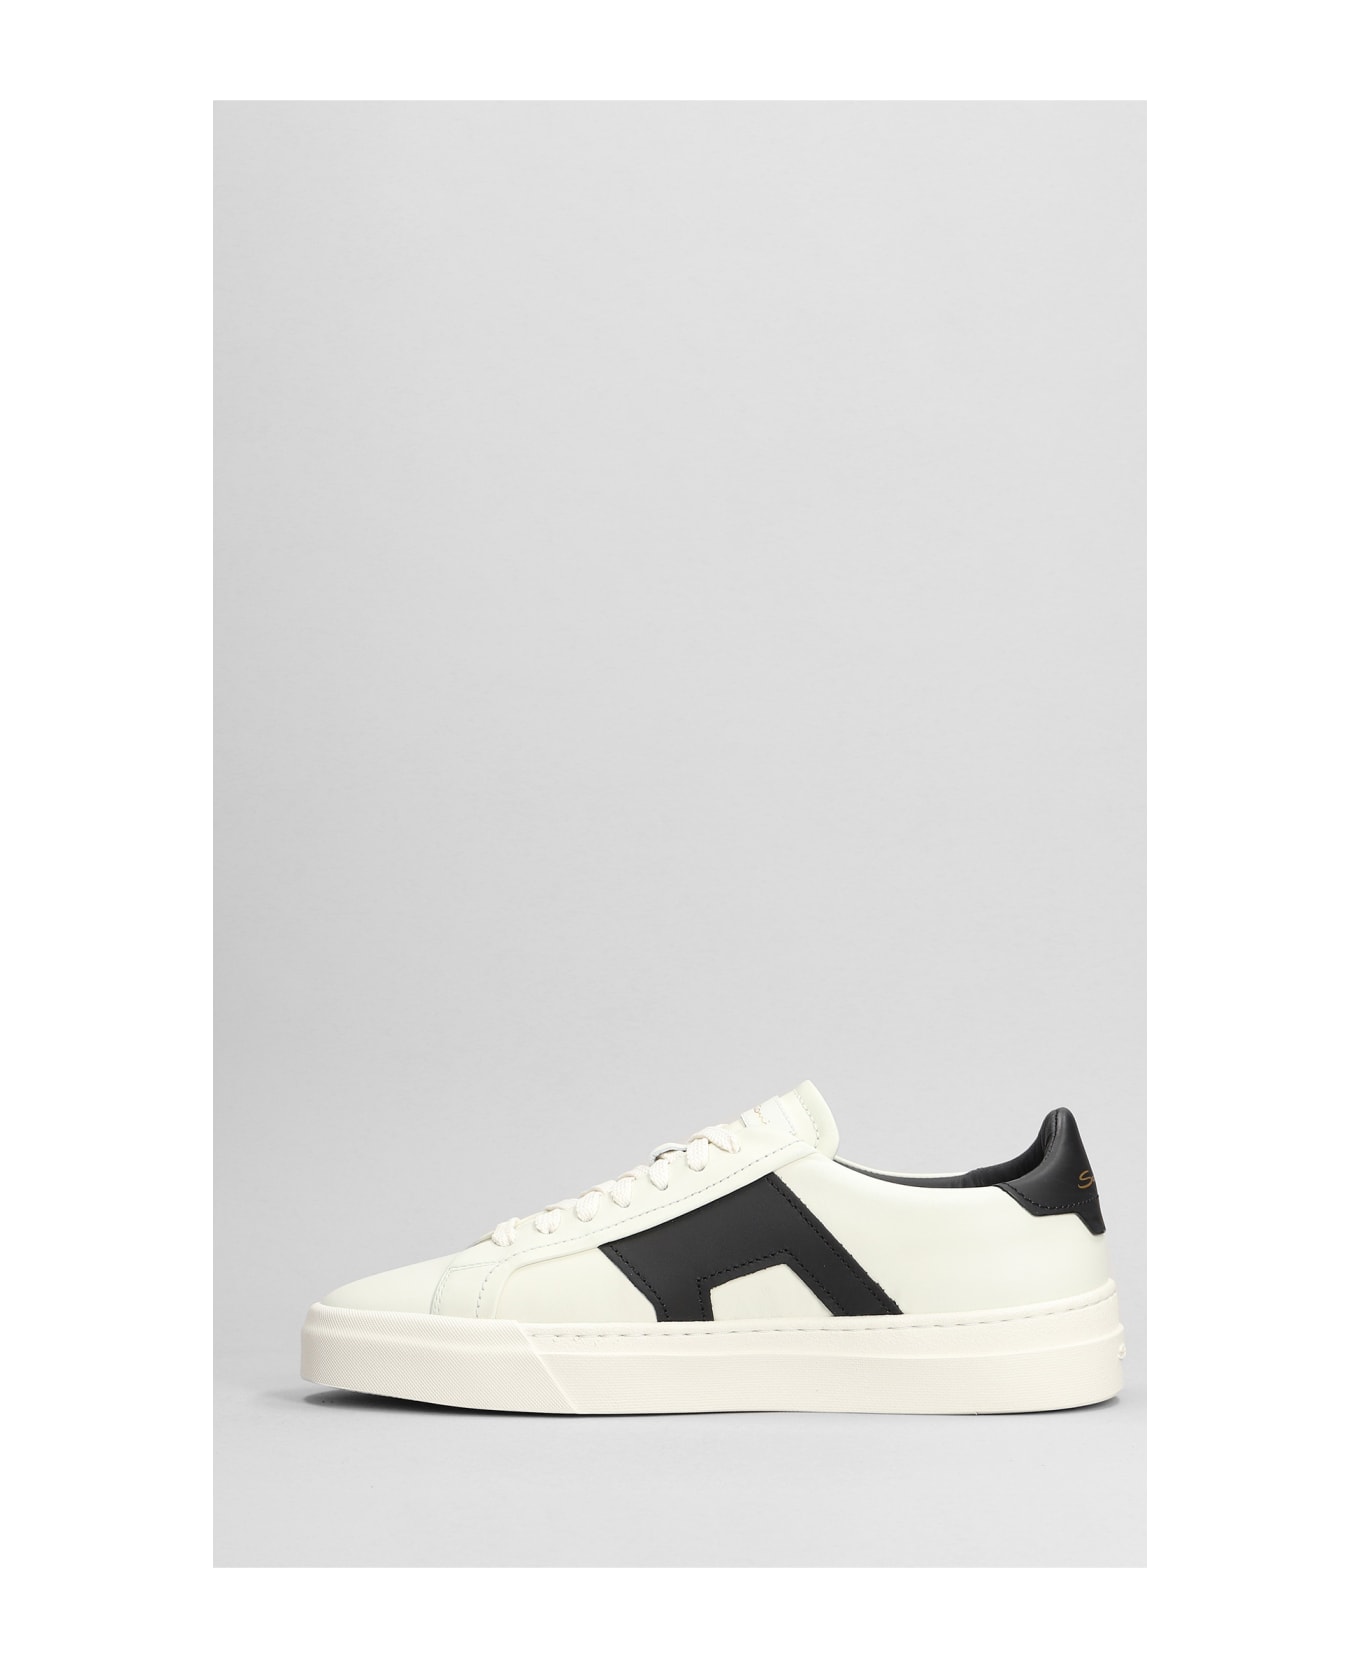 Santoni Dbs4 Sneakers In White Leather - white